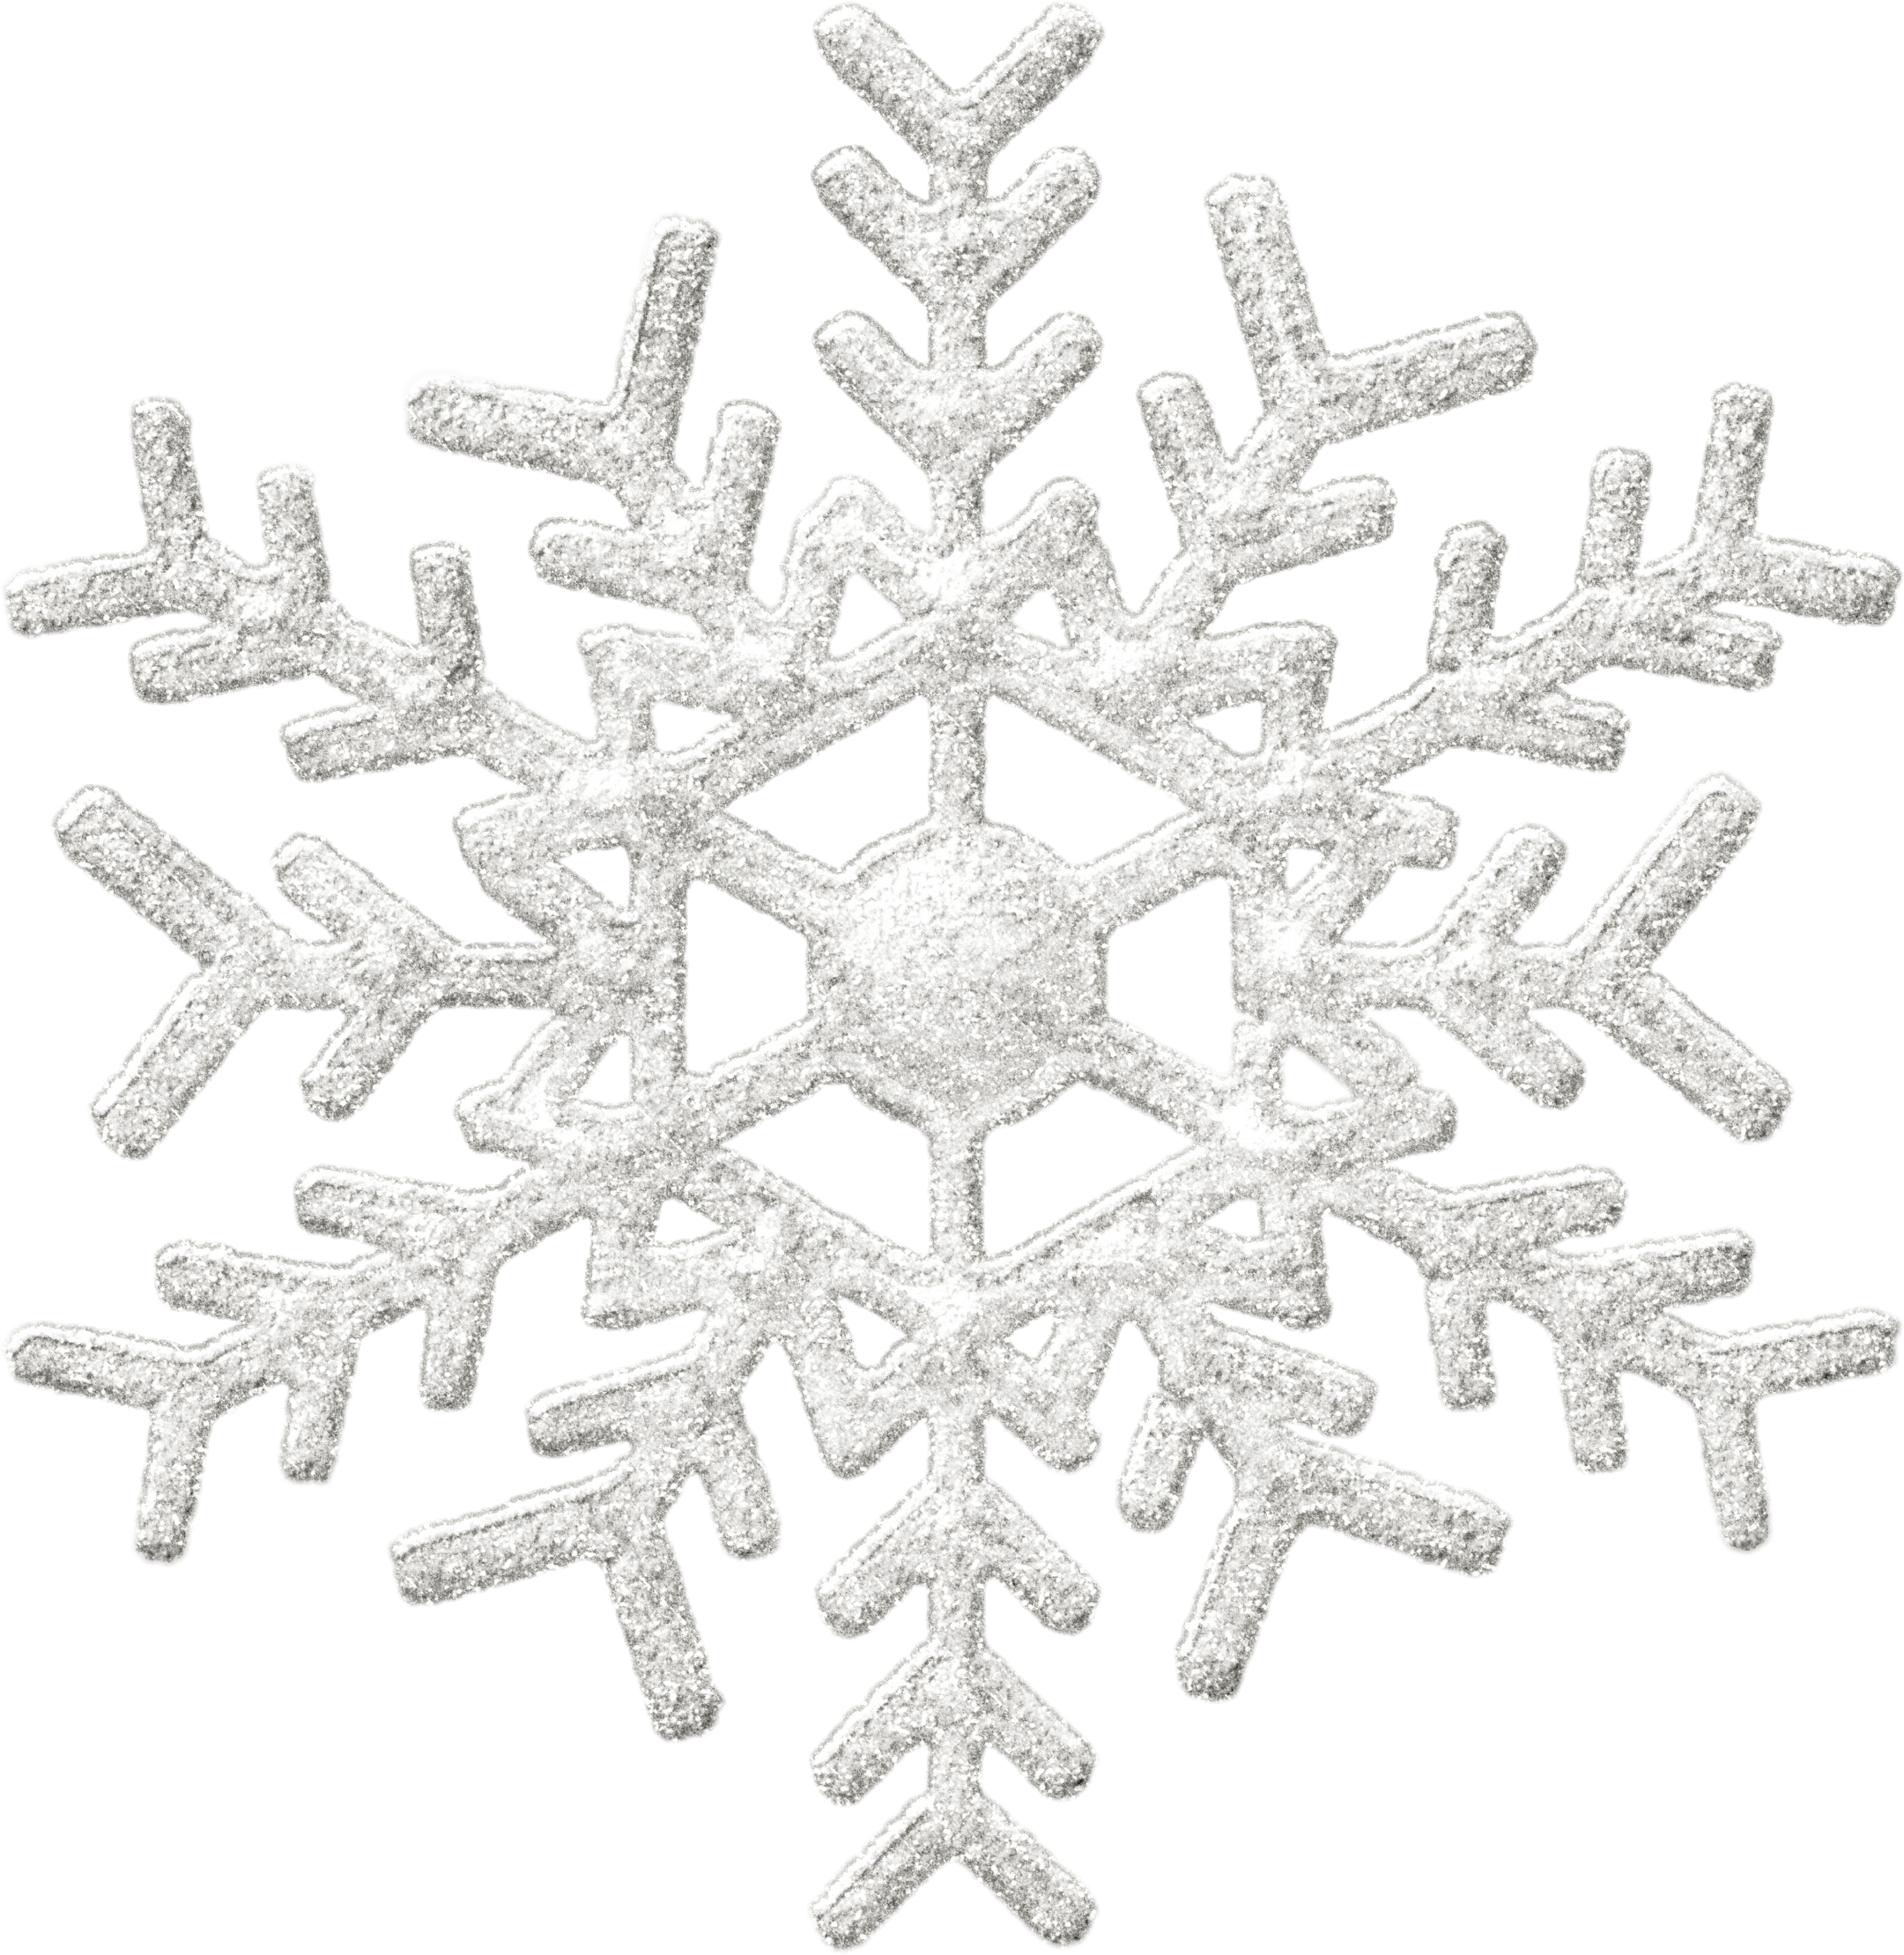 Textured Snowflake Illustration